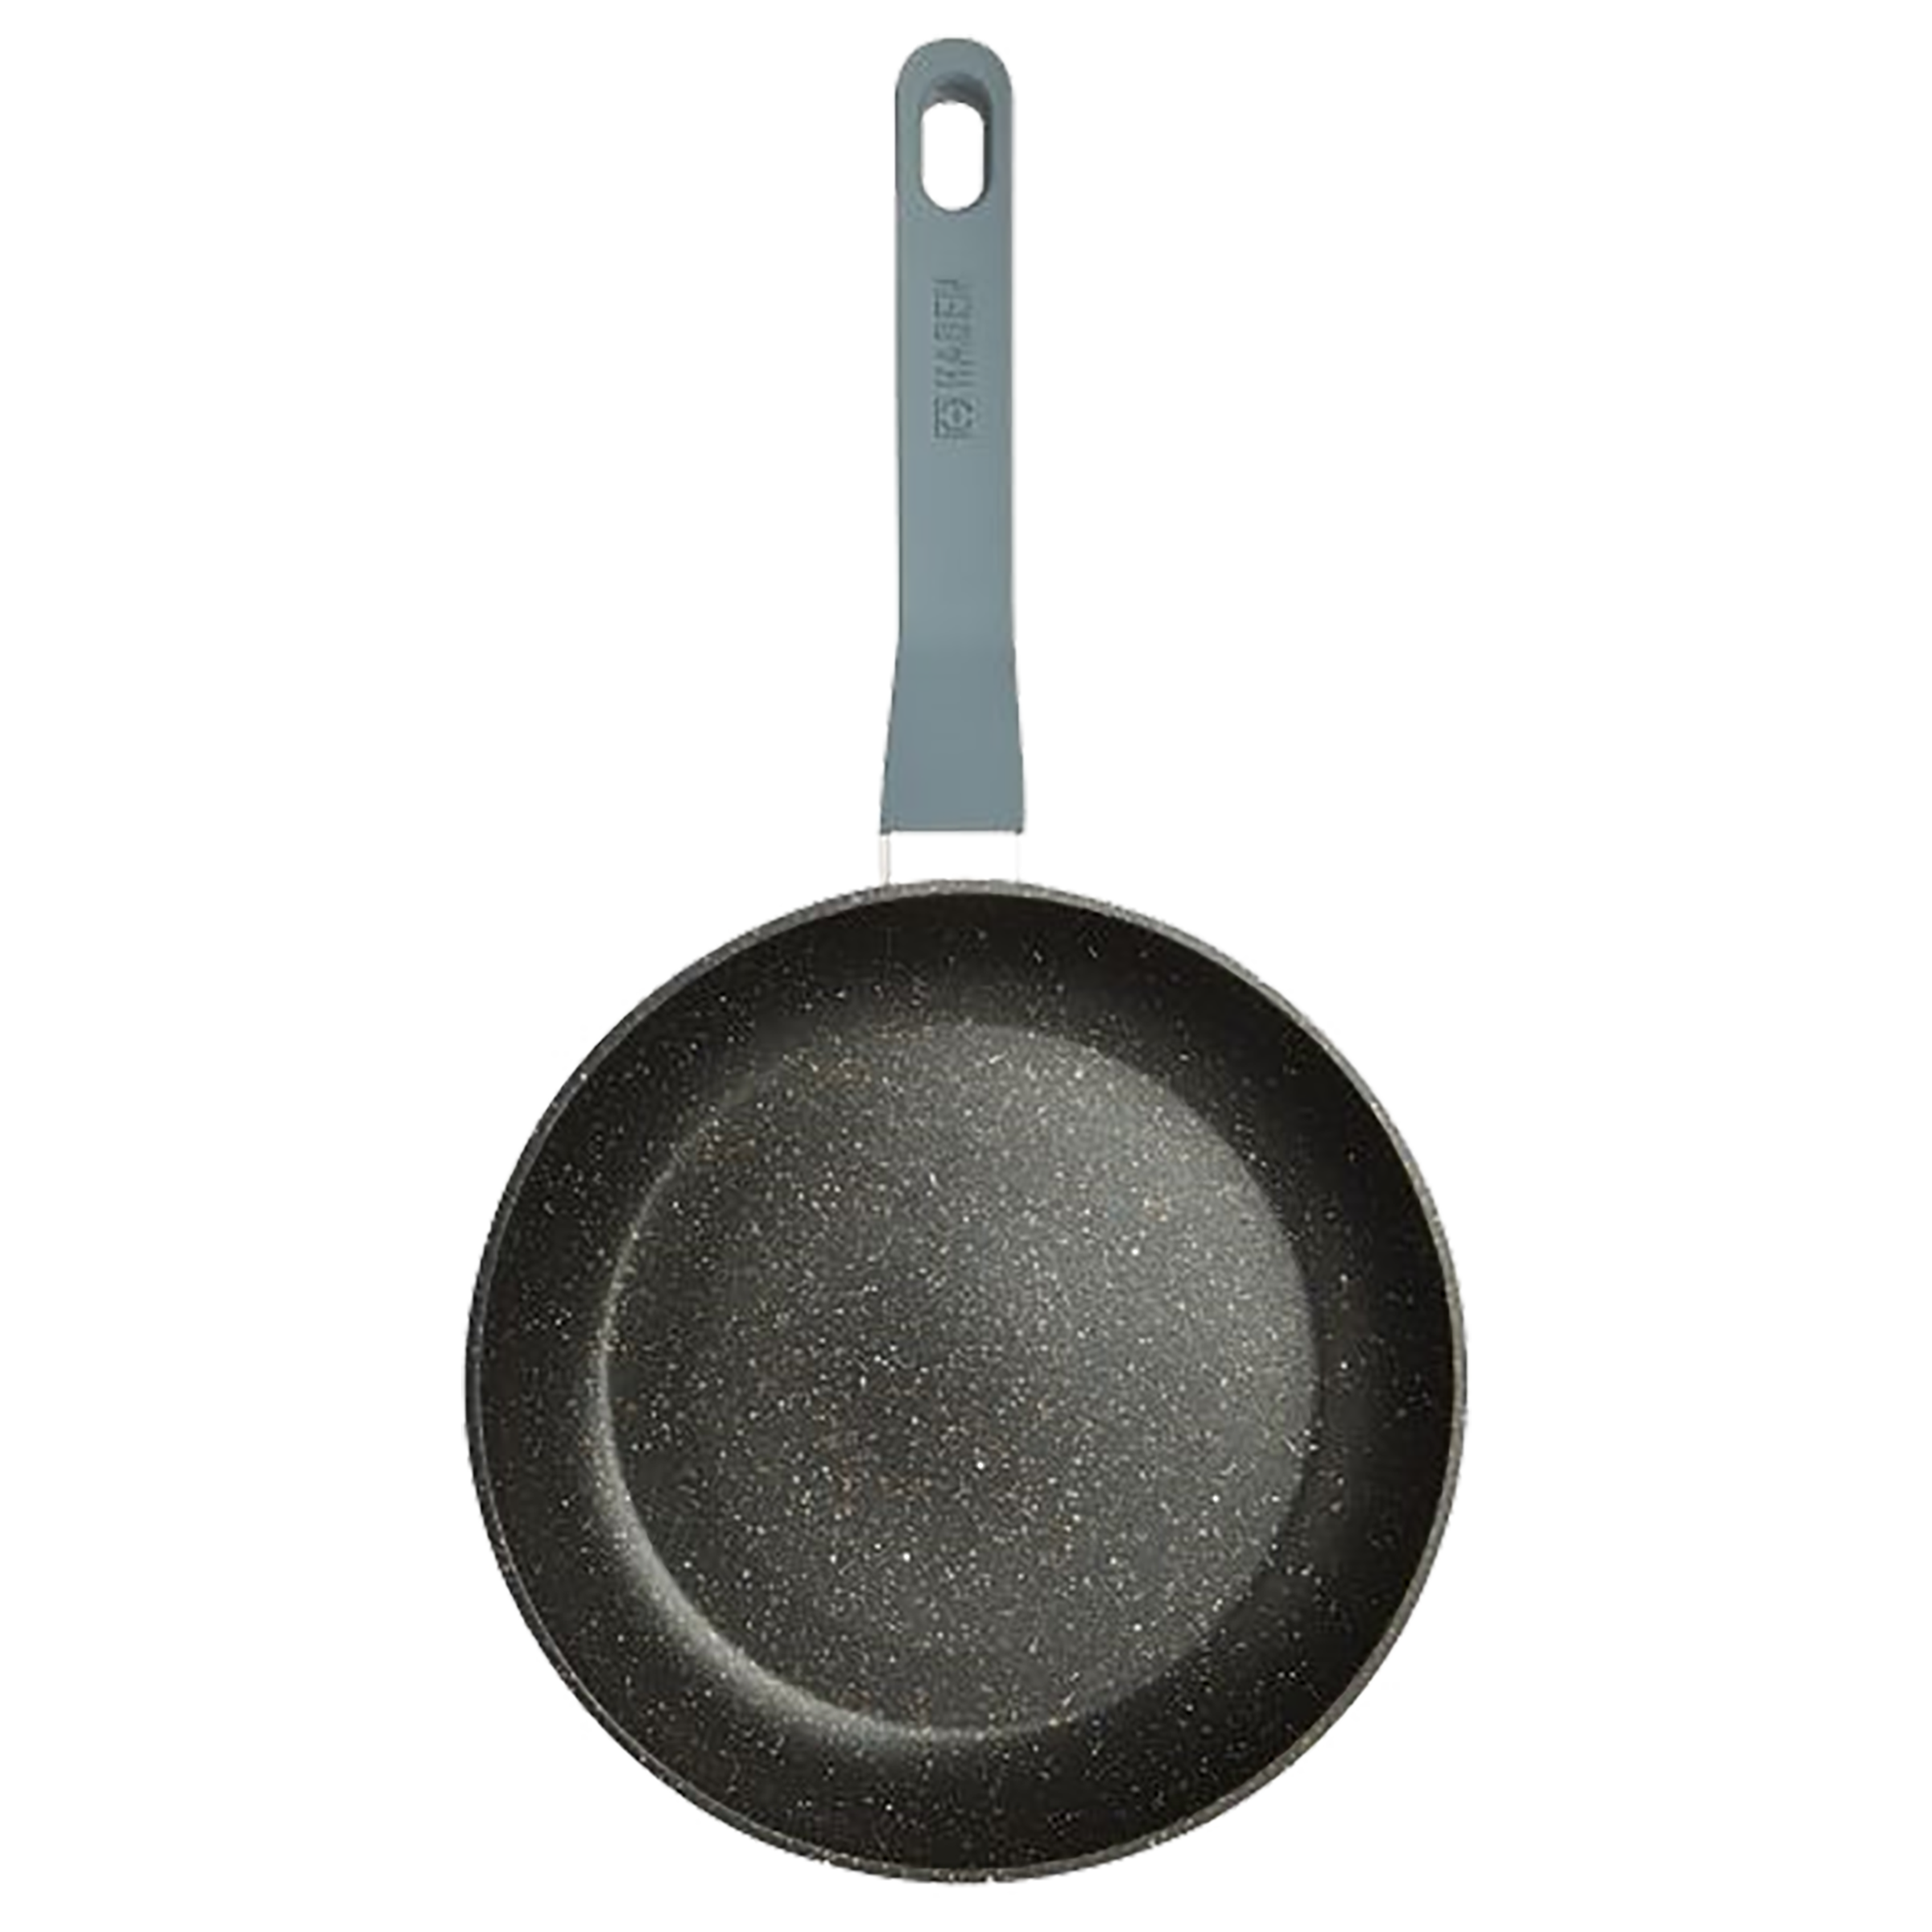 Sabichi Haden Pan (Cook & Clean Pans Easily, 197788, Black)